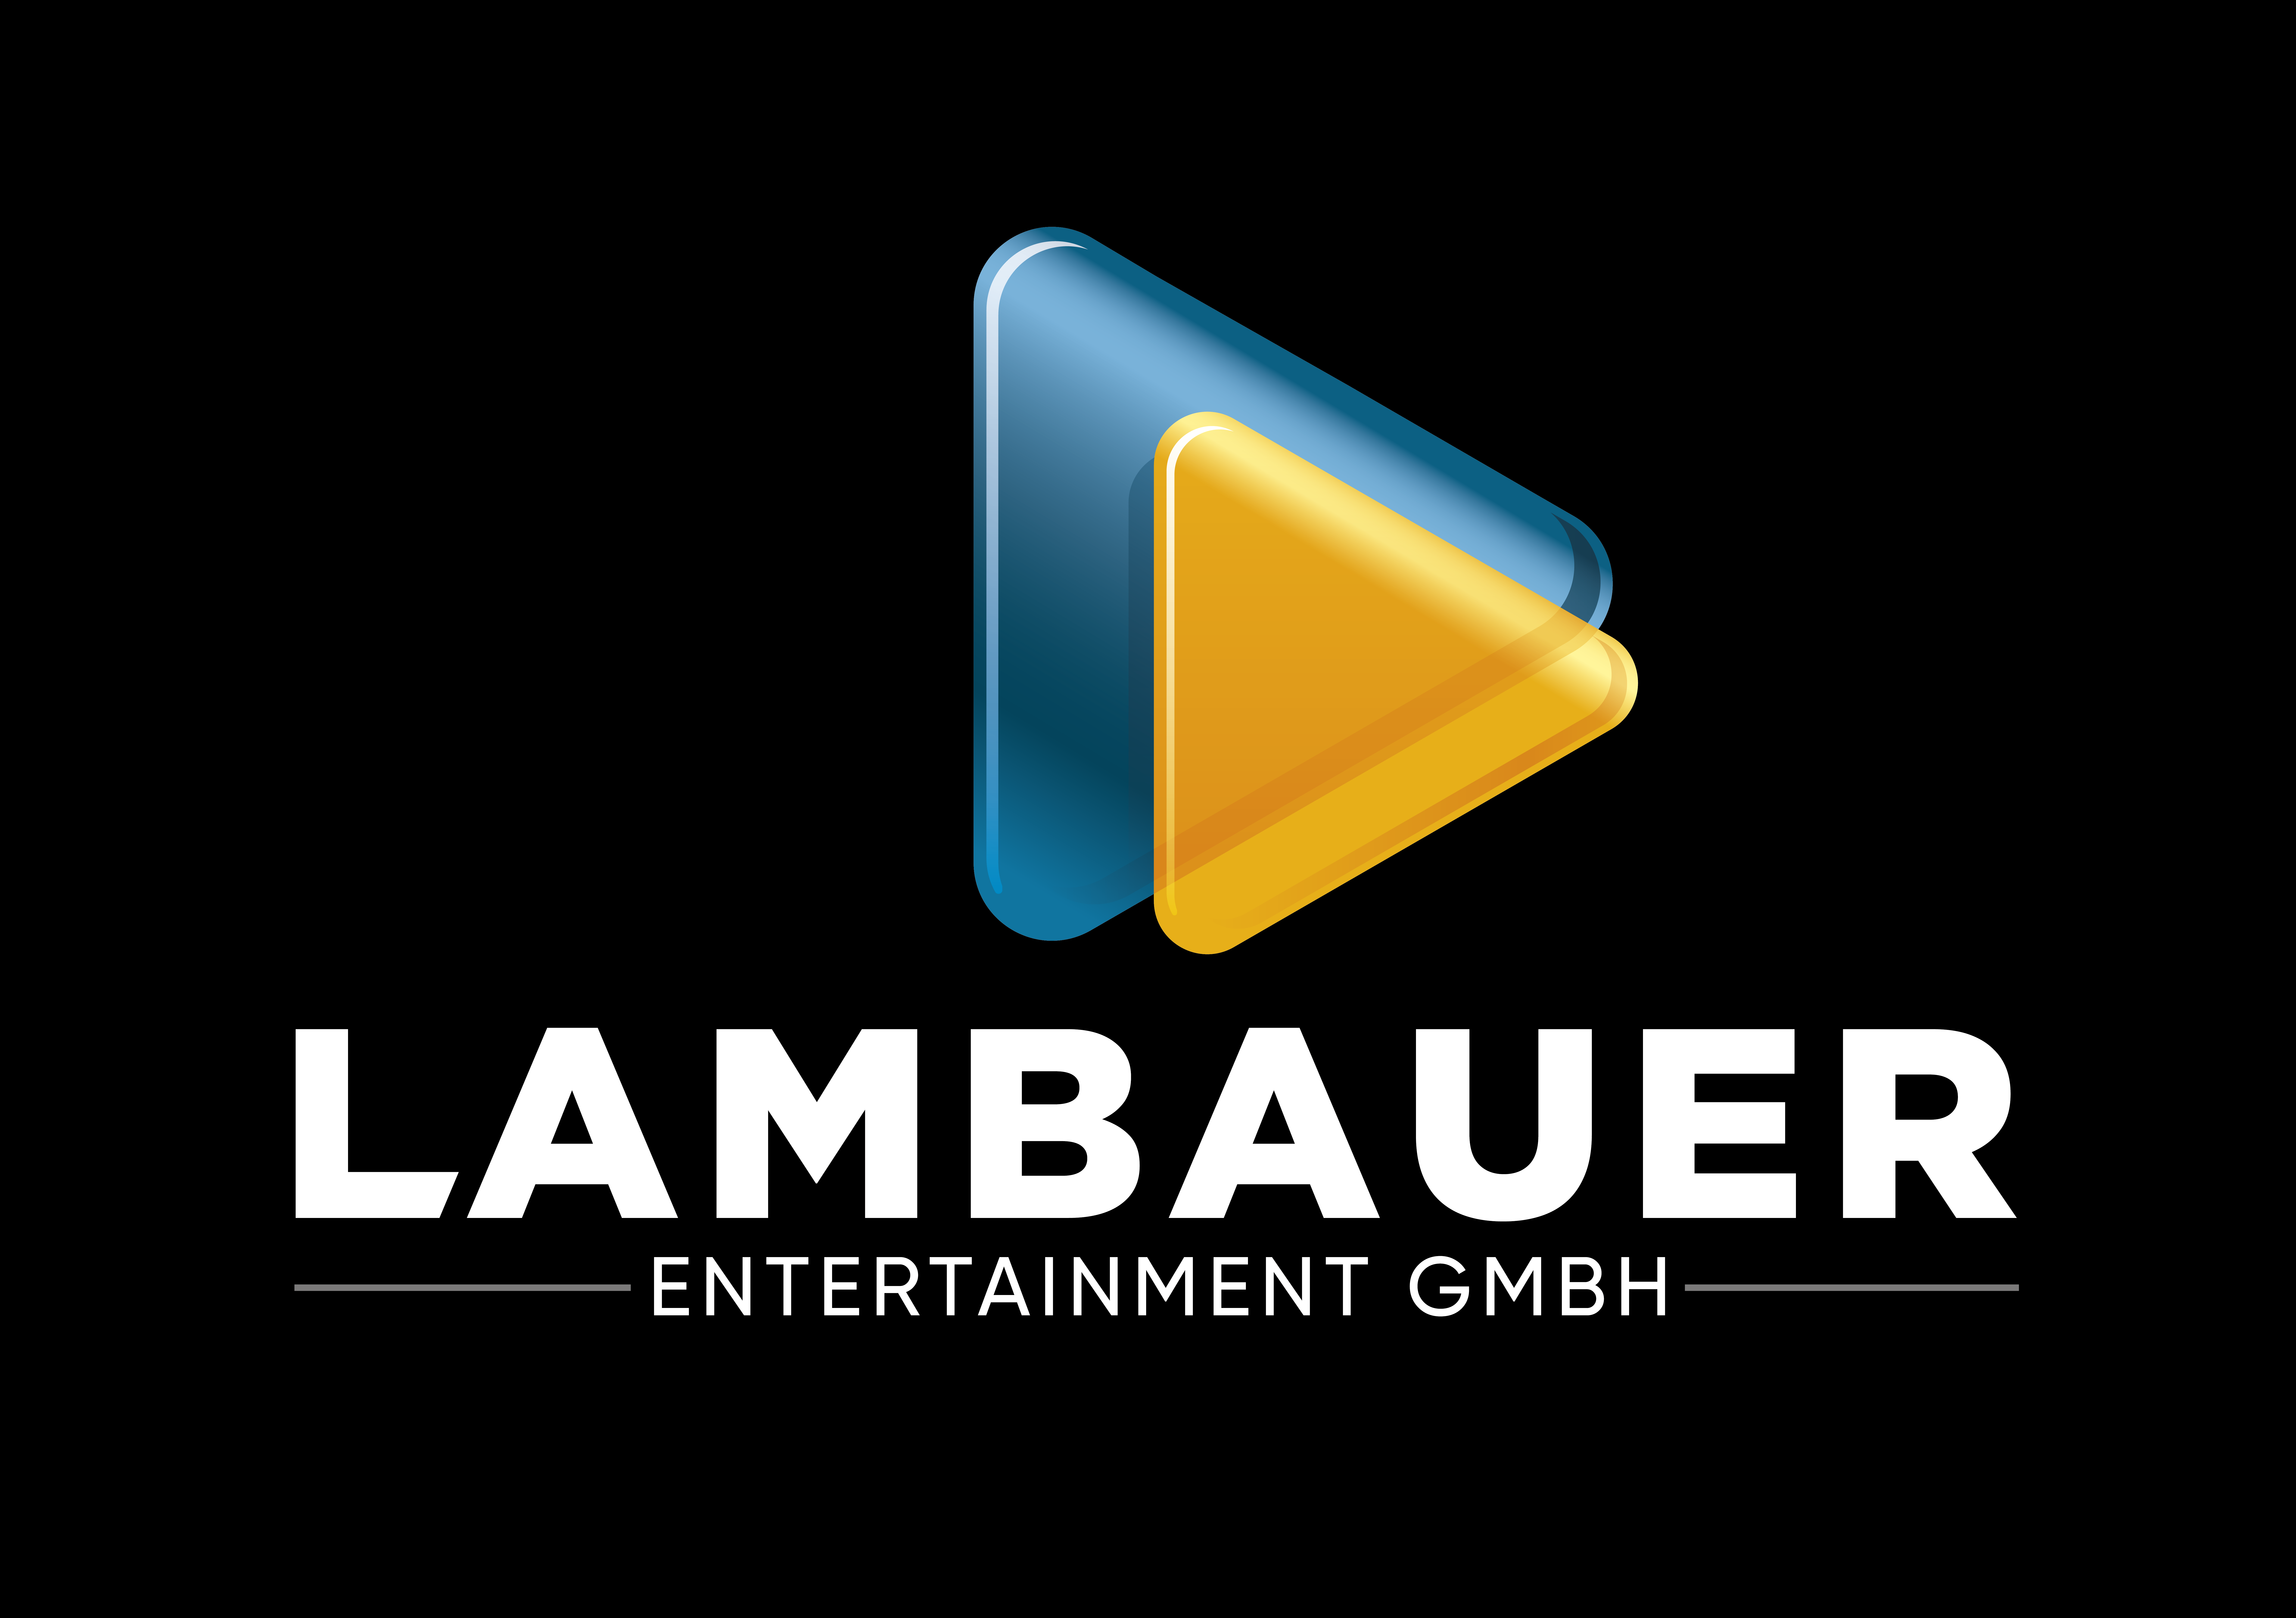 Lambauer Entertainment GmbH